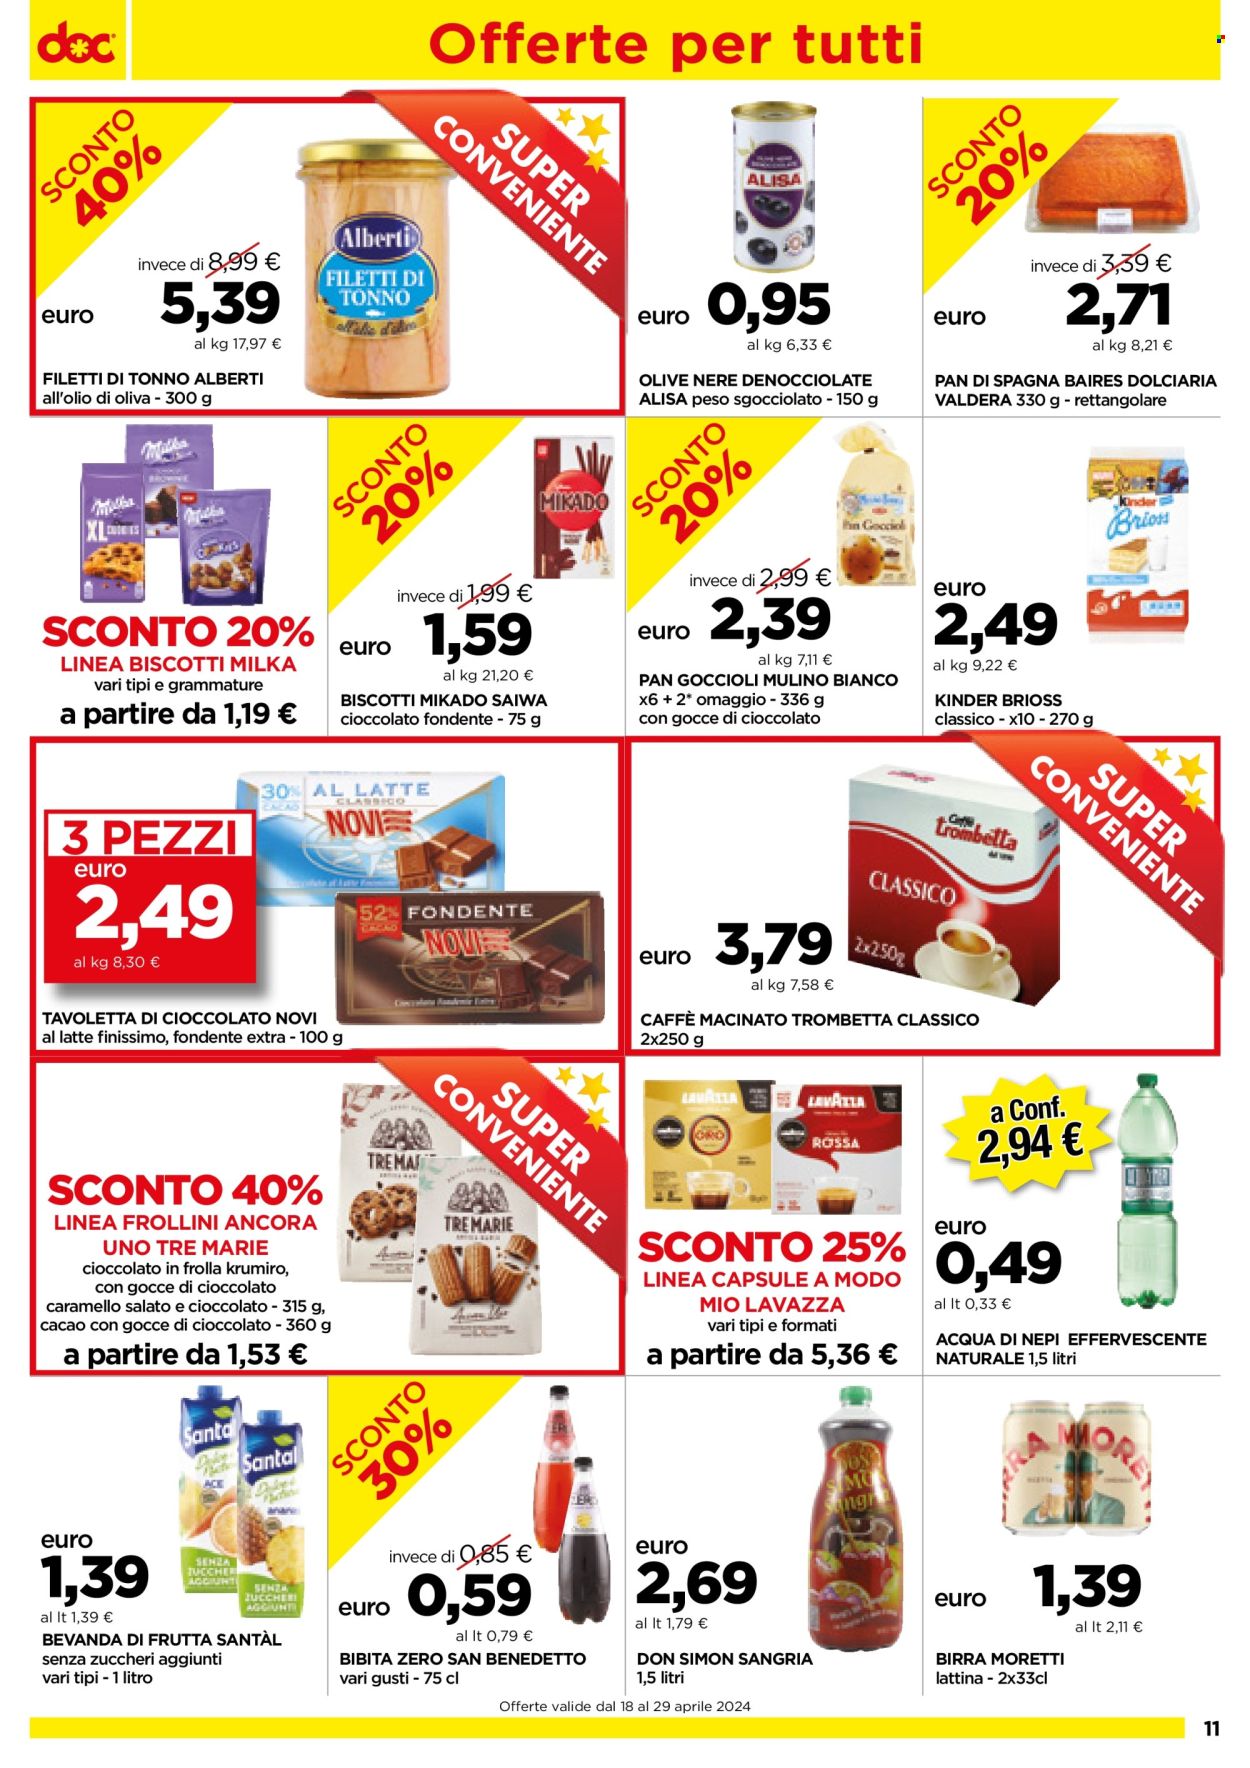 Volantino doc supermercati - 18.4.2024 - 29.4.2024.